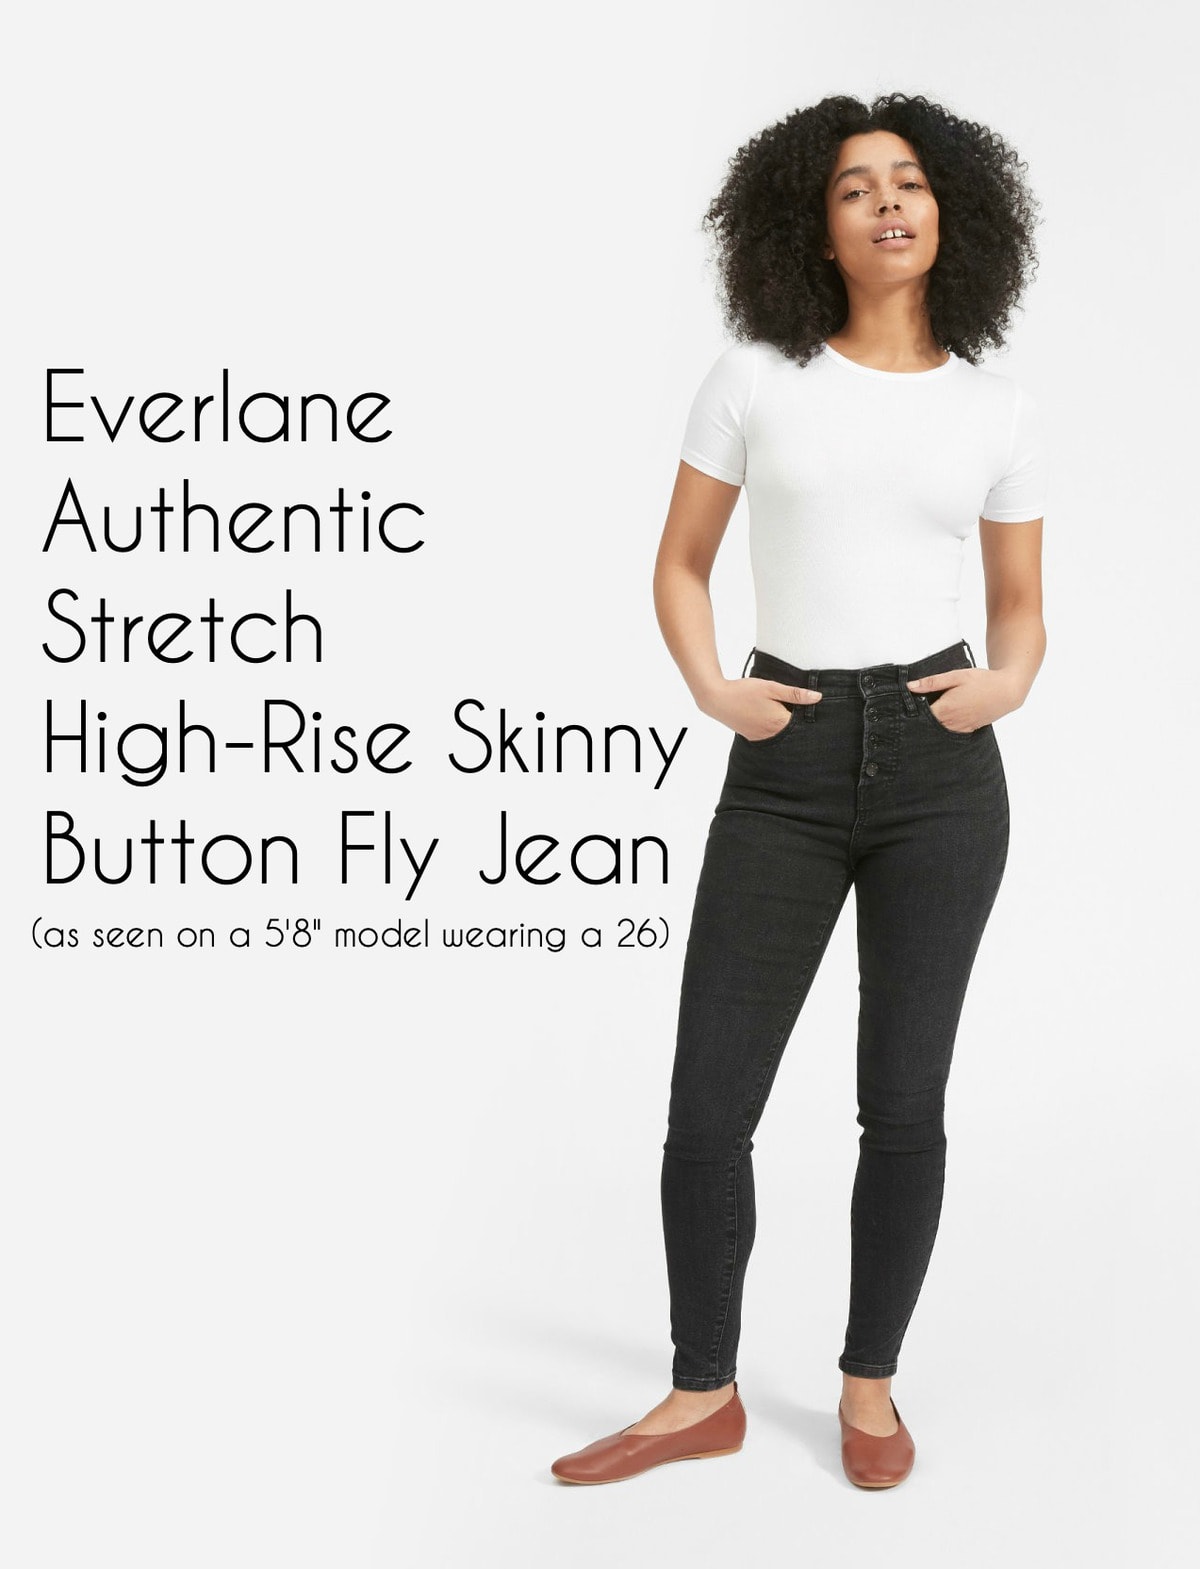 everlane jeans sizing